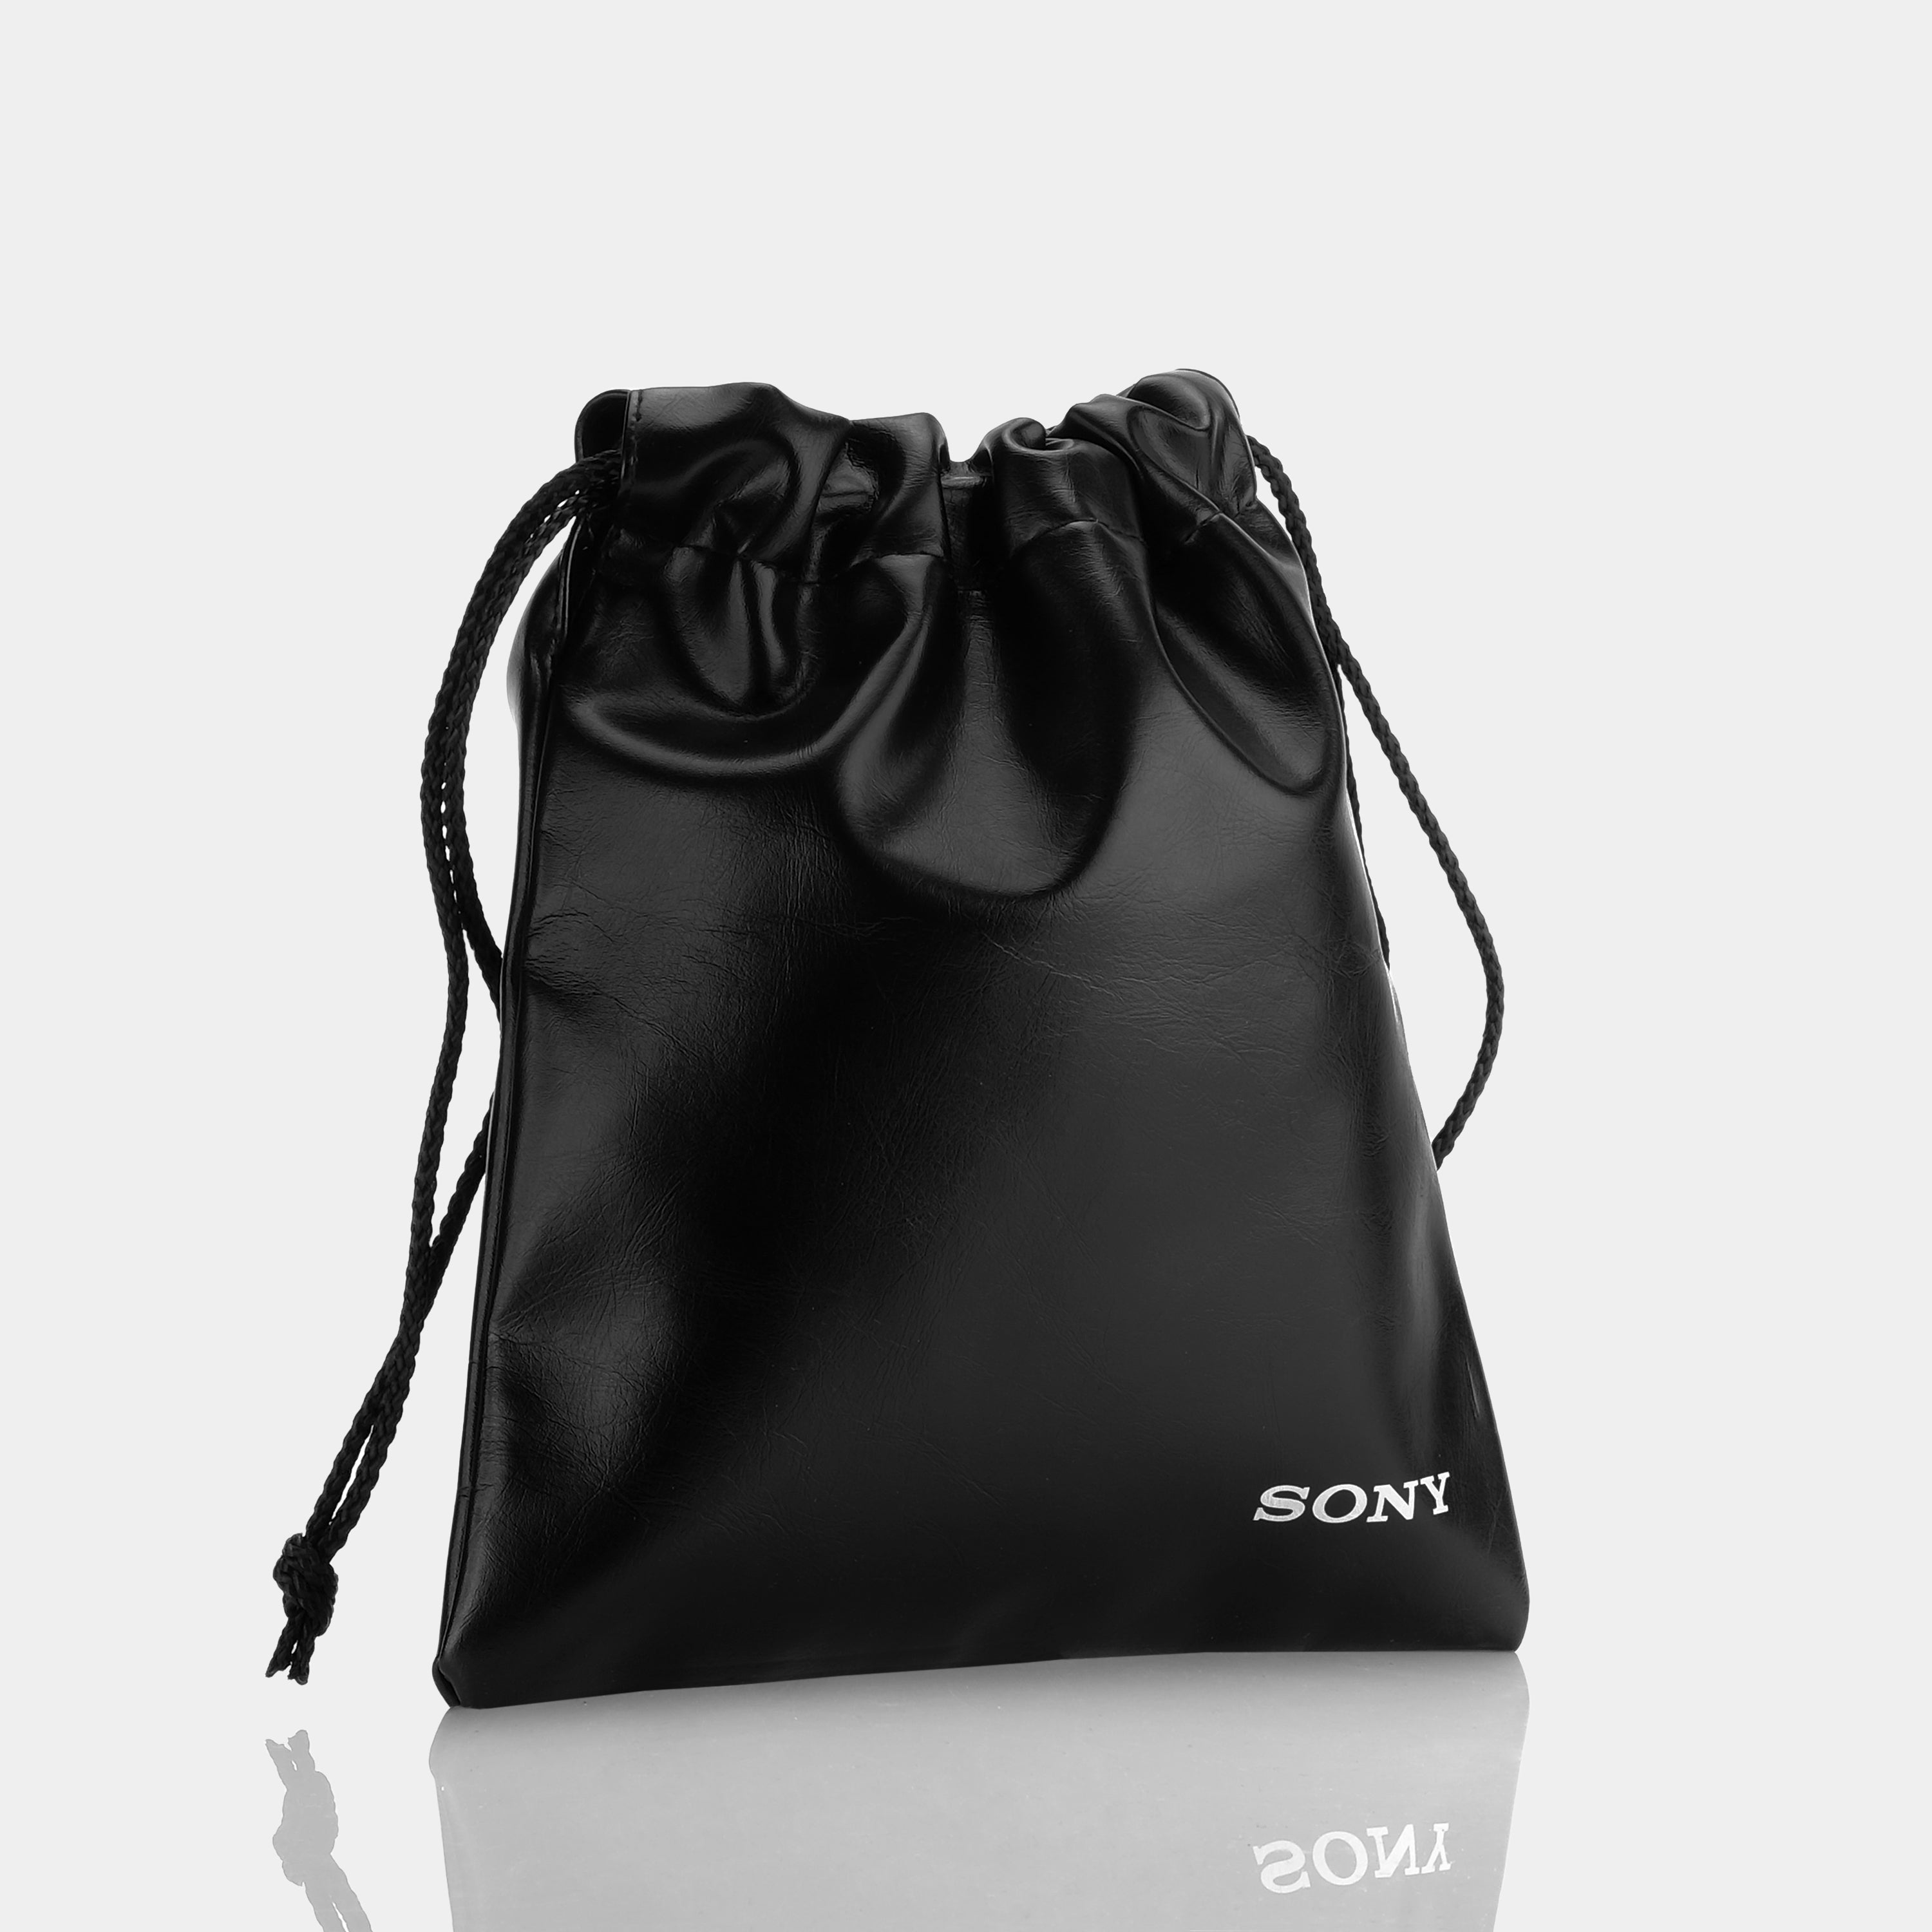 Sony Black Drawstring 35mm Camera Bag